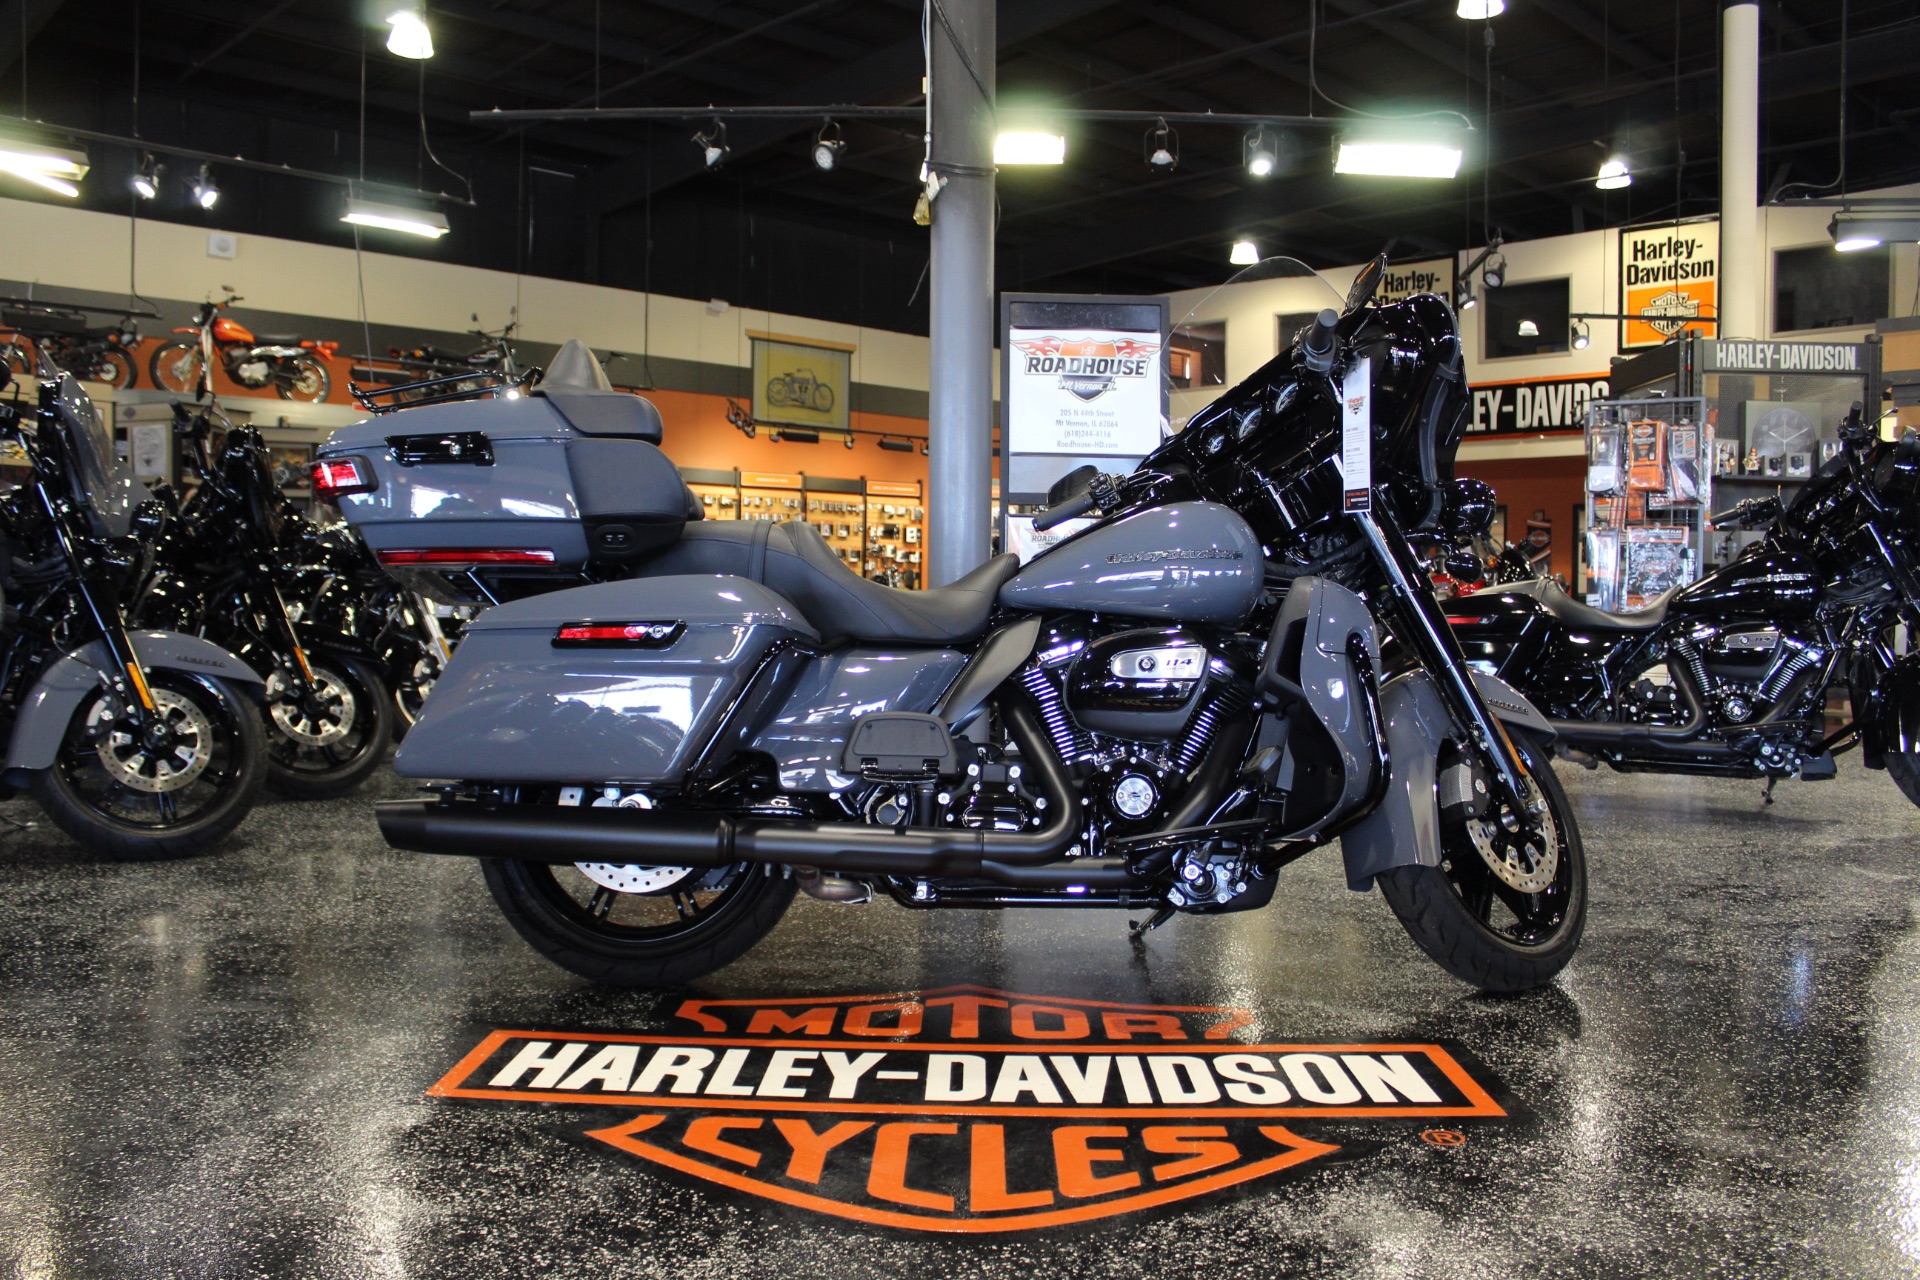 2022 Harley-Davidson Ultra Limited in Mount Vernon, Illinois - Photo 1